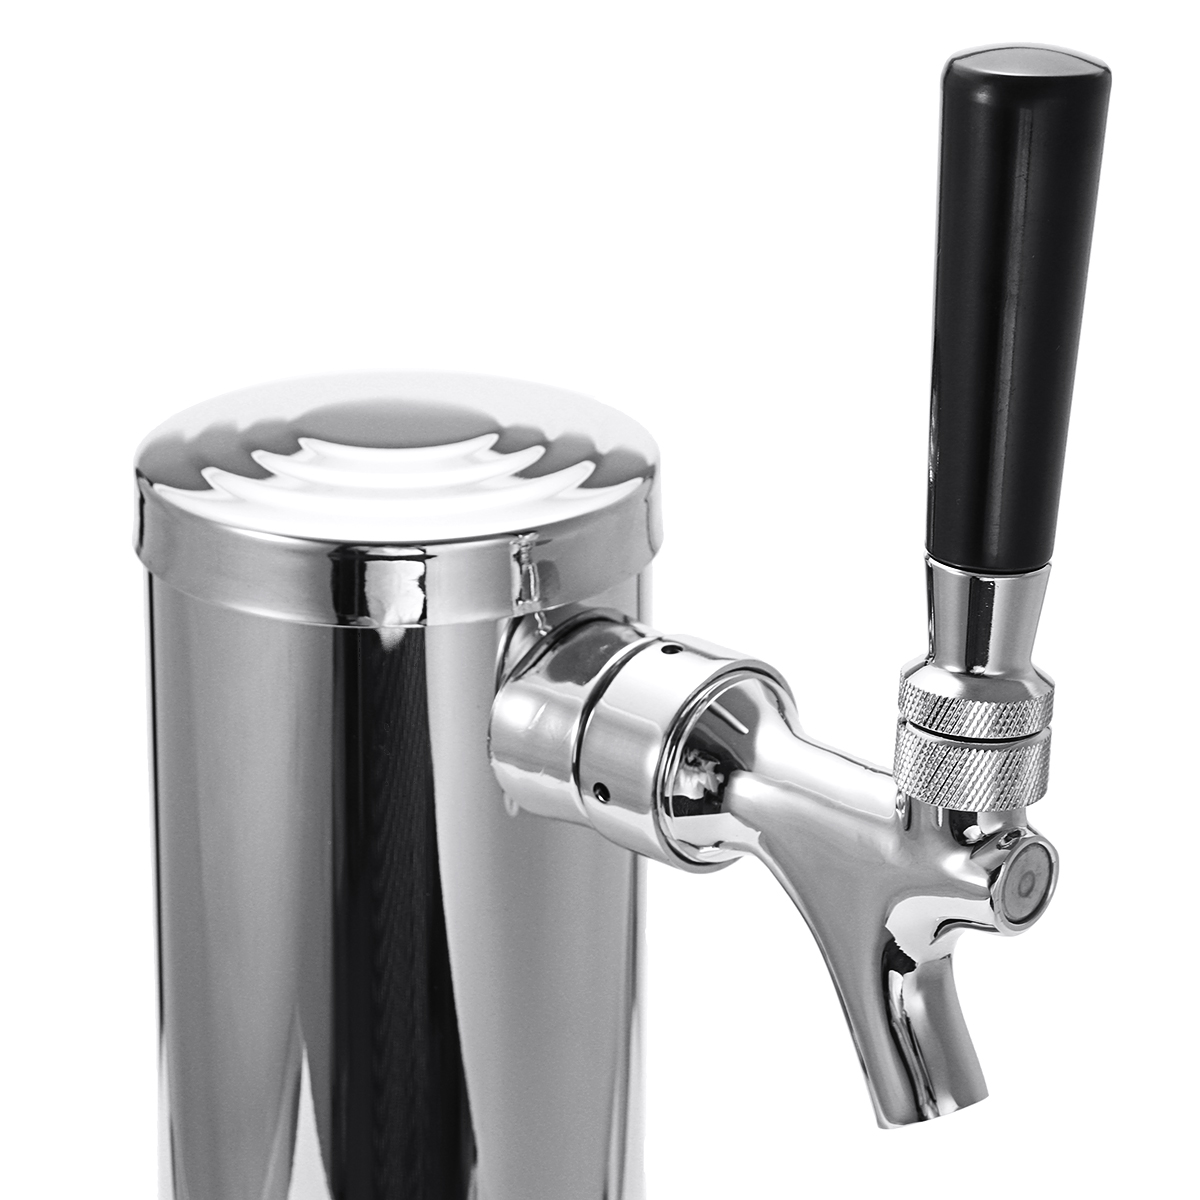 Stainless-Steel-Juice-Brewage-Draft-Single-Dispenser-Faucet-Tap-Drink-Tower-Bar-1529897